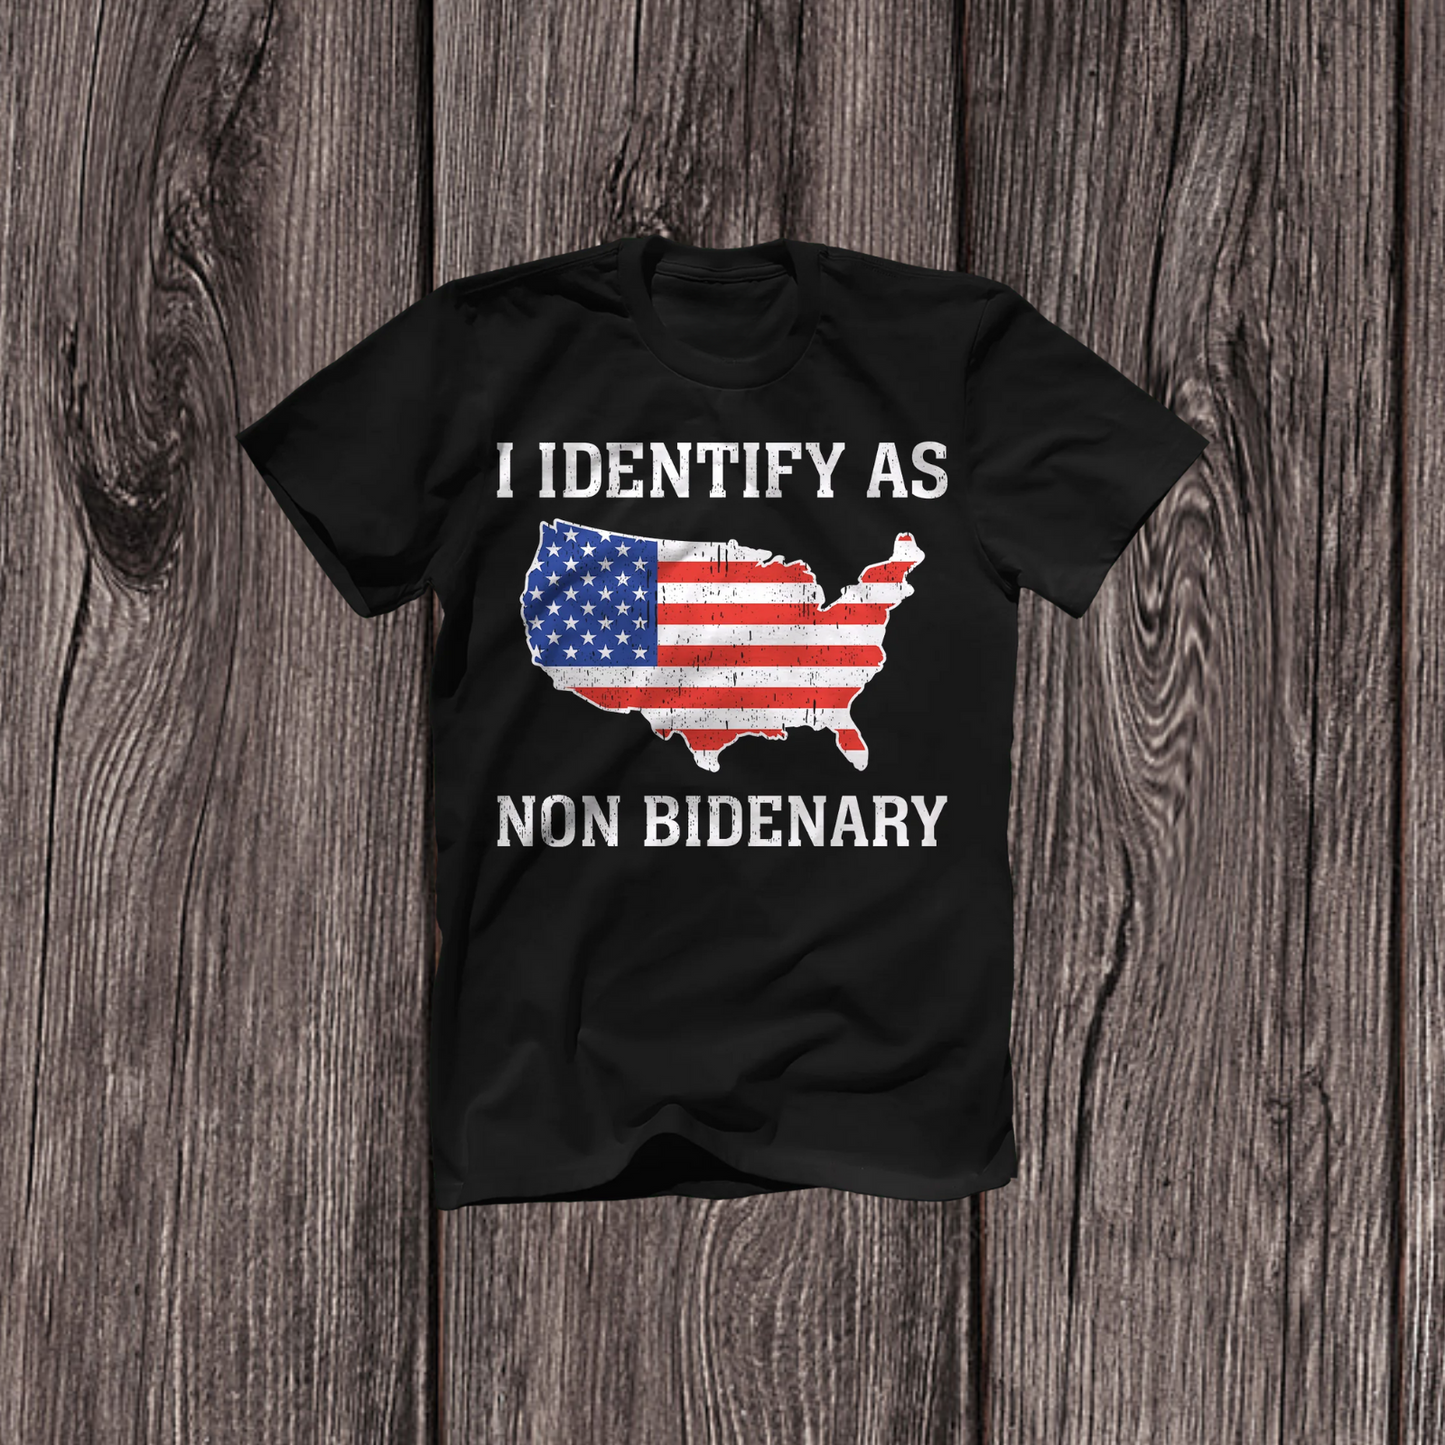 I Identify As Non-Bidenary Classic T-Shirt, Non Bidenary Shirt